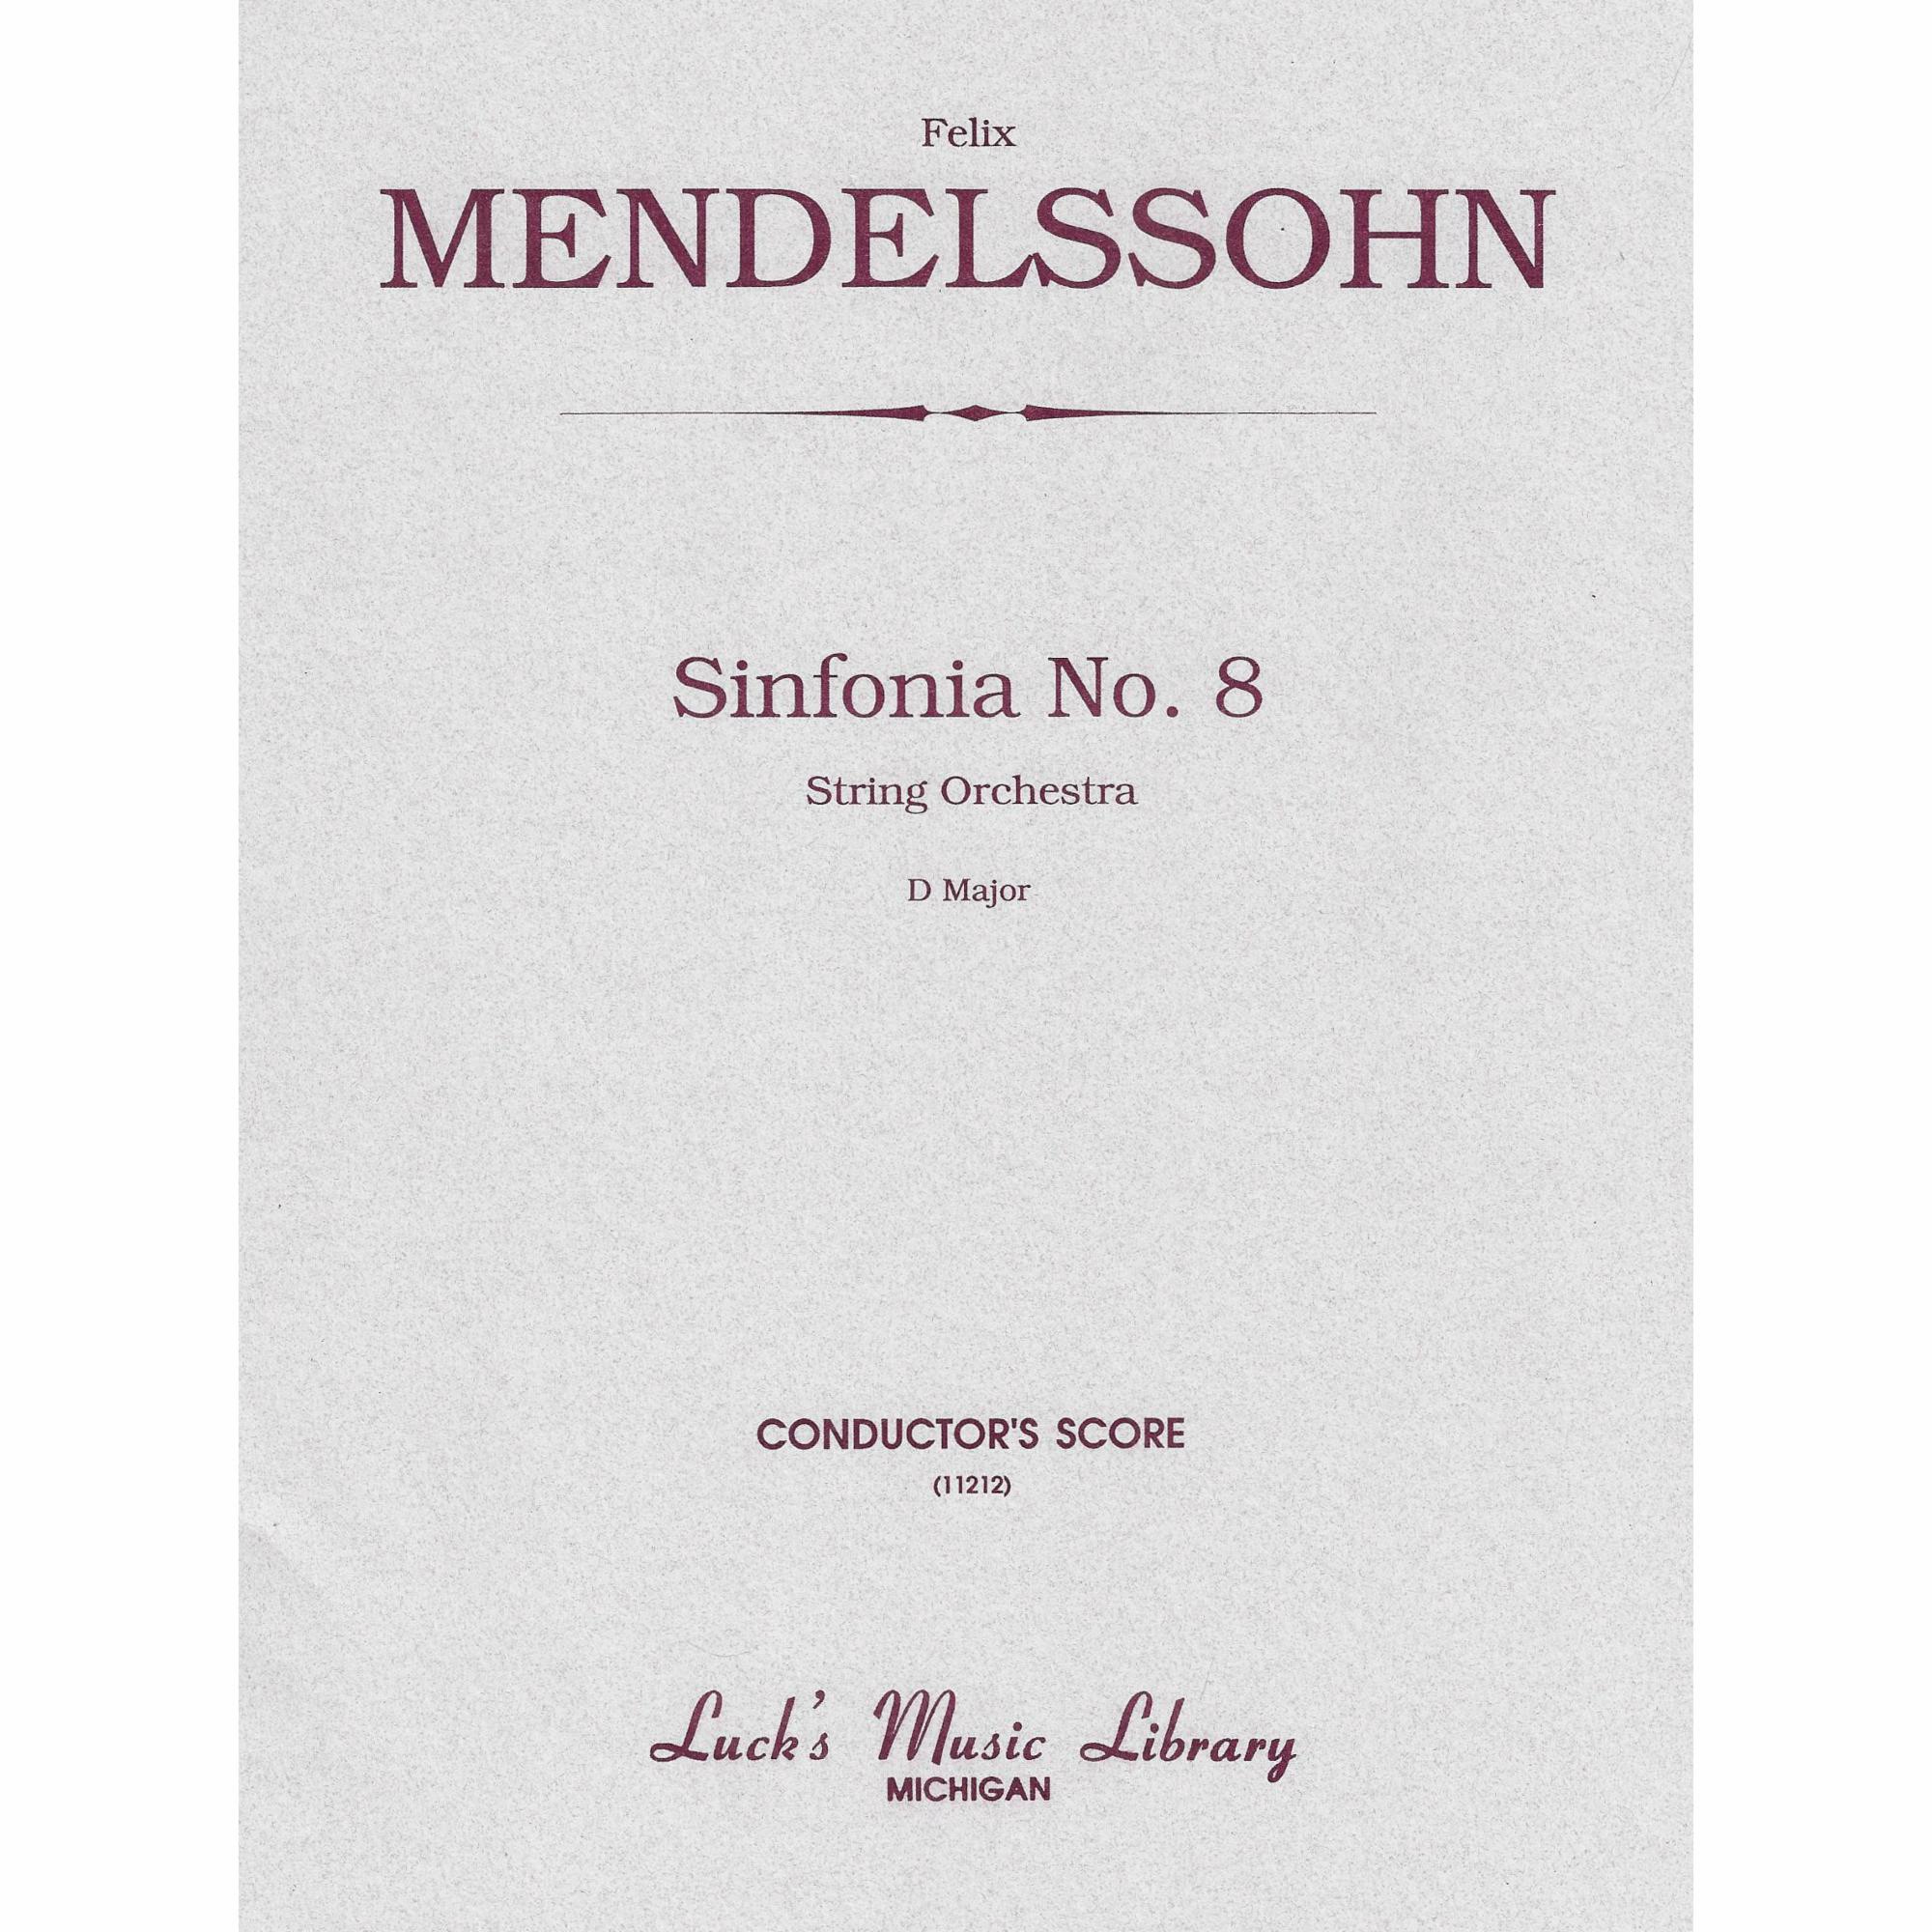 Mendelssohn -- Sinfonia No. 8 in D Major for String Orchestra